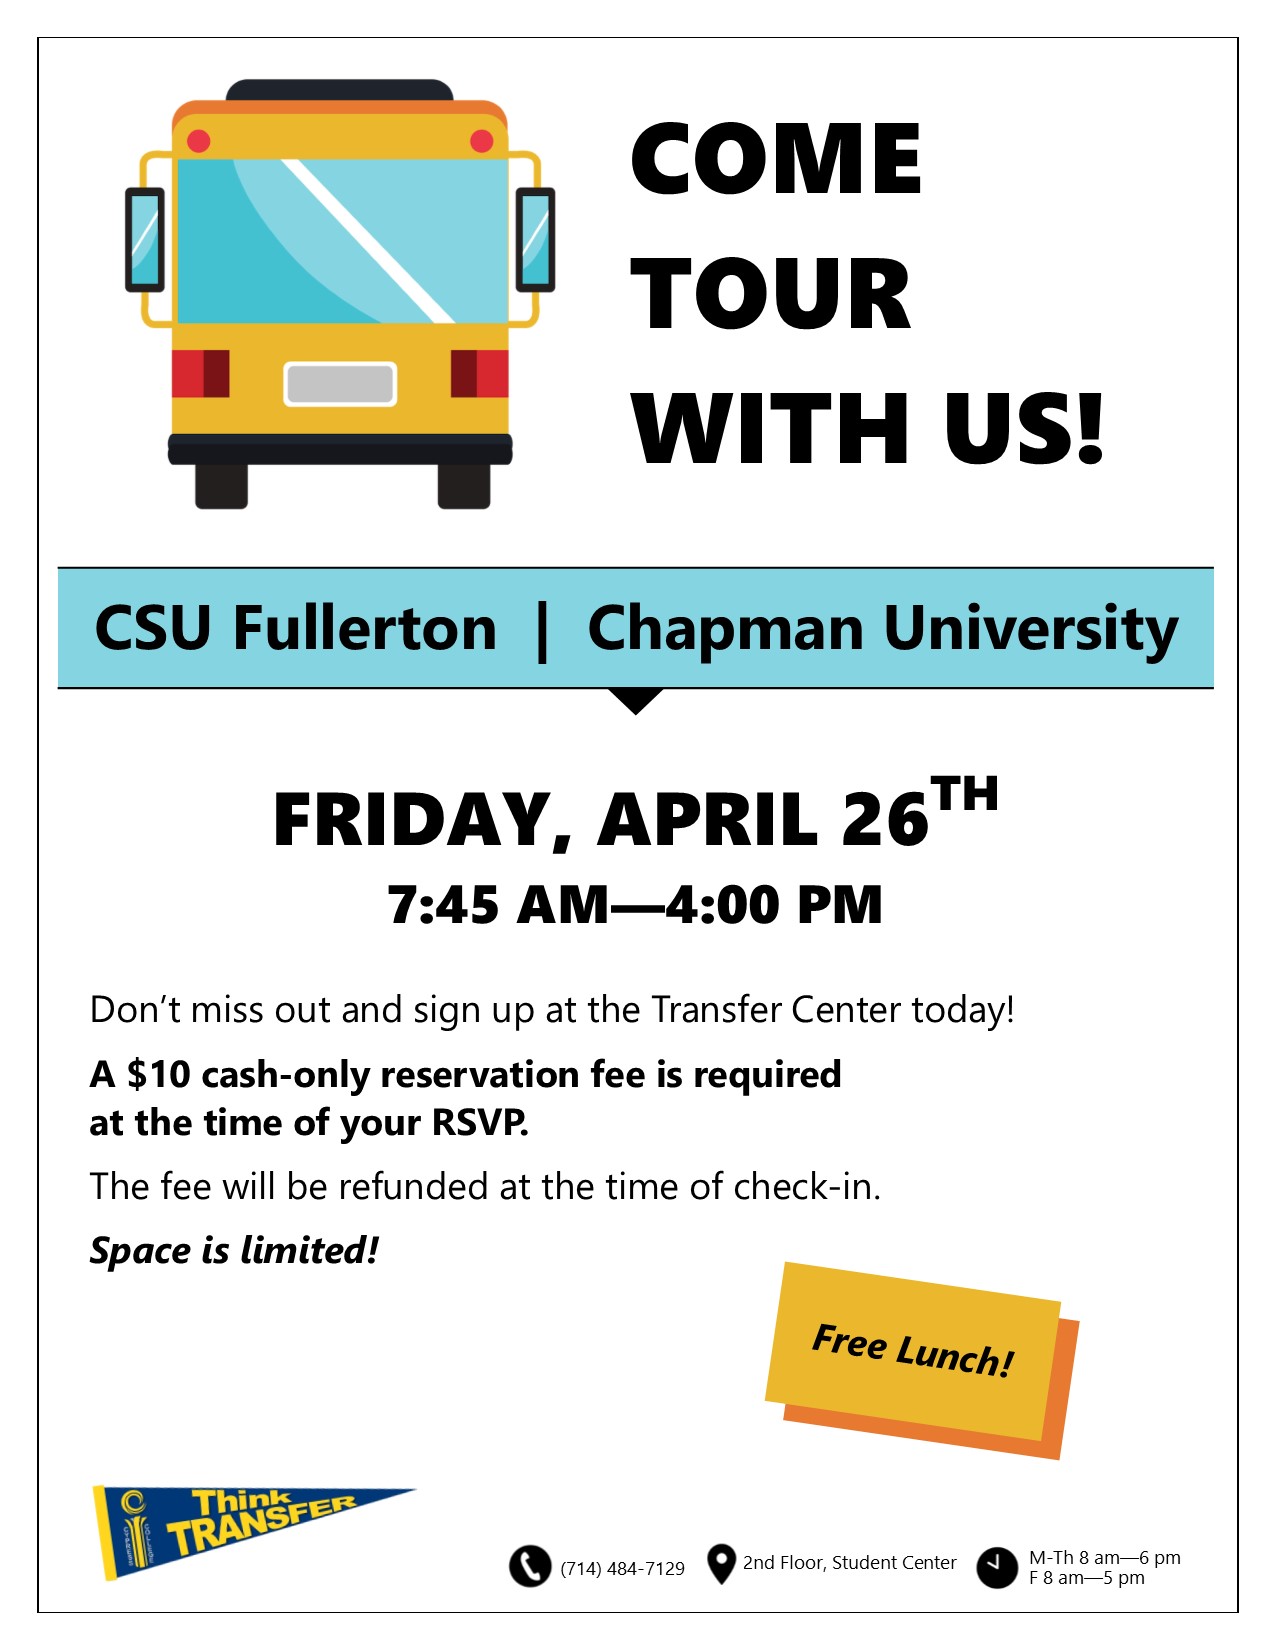 CSU Fullerton/Chapman University Bus Tour flyer